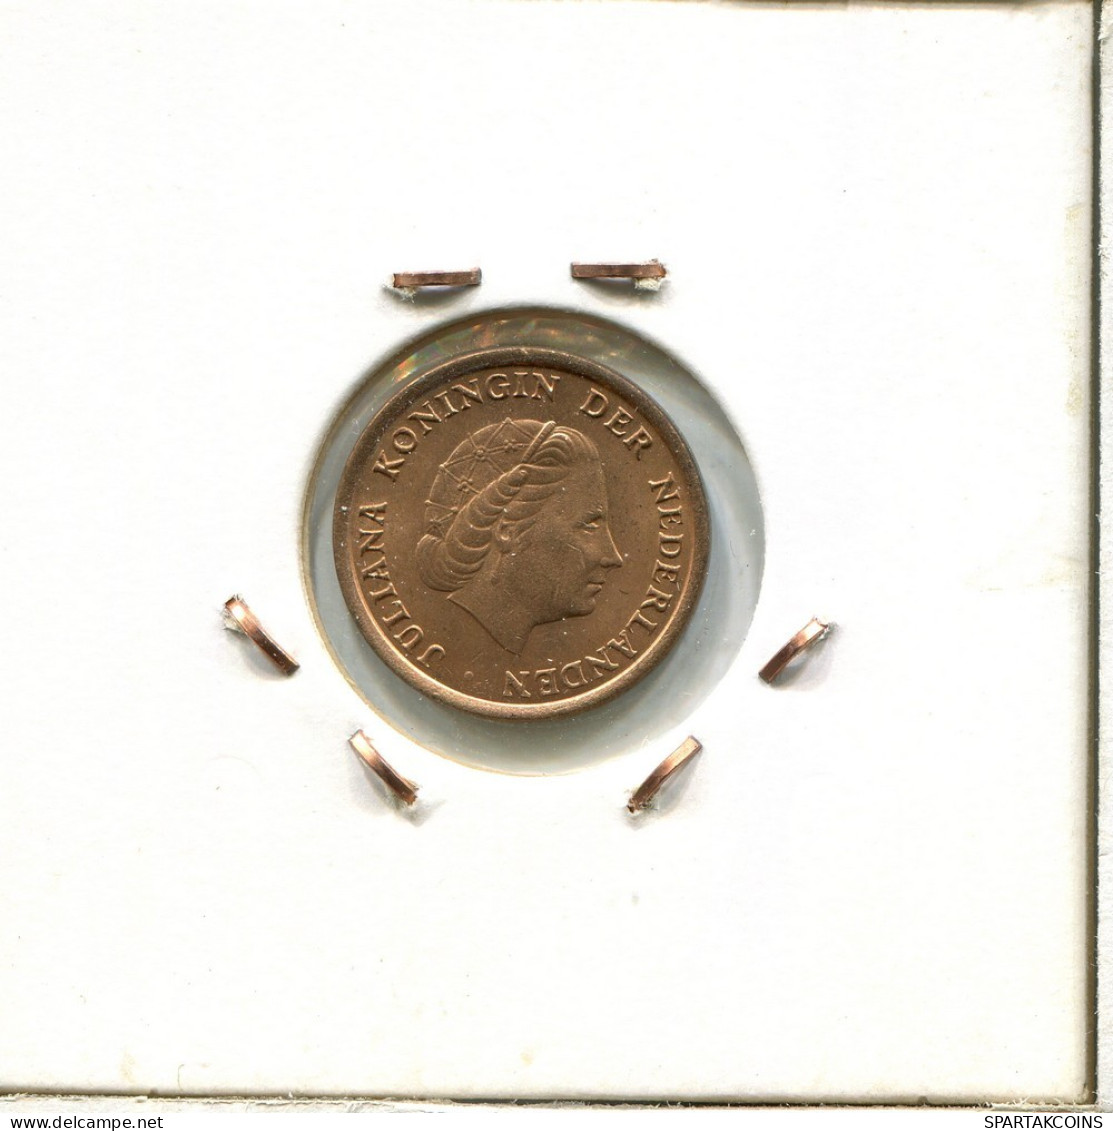 1 CENT 1980 NEERLANDÉS NETHERLANDS Moneda #AU407.E.A - 1948-1980: Juliana